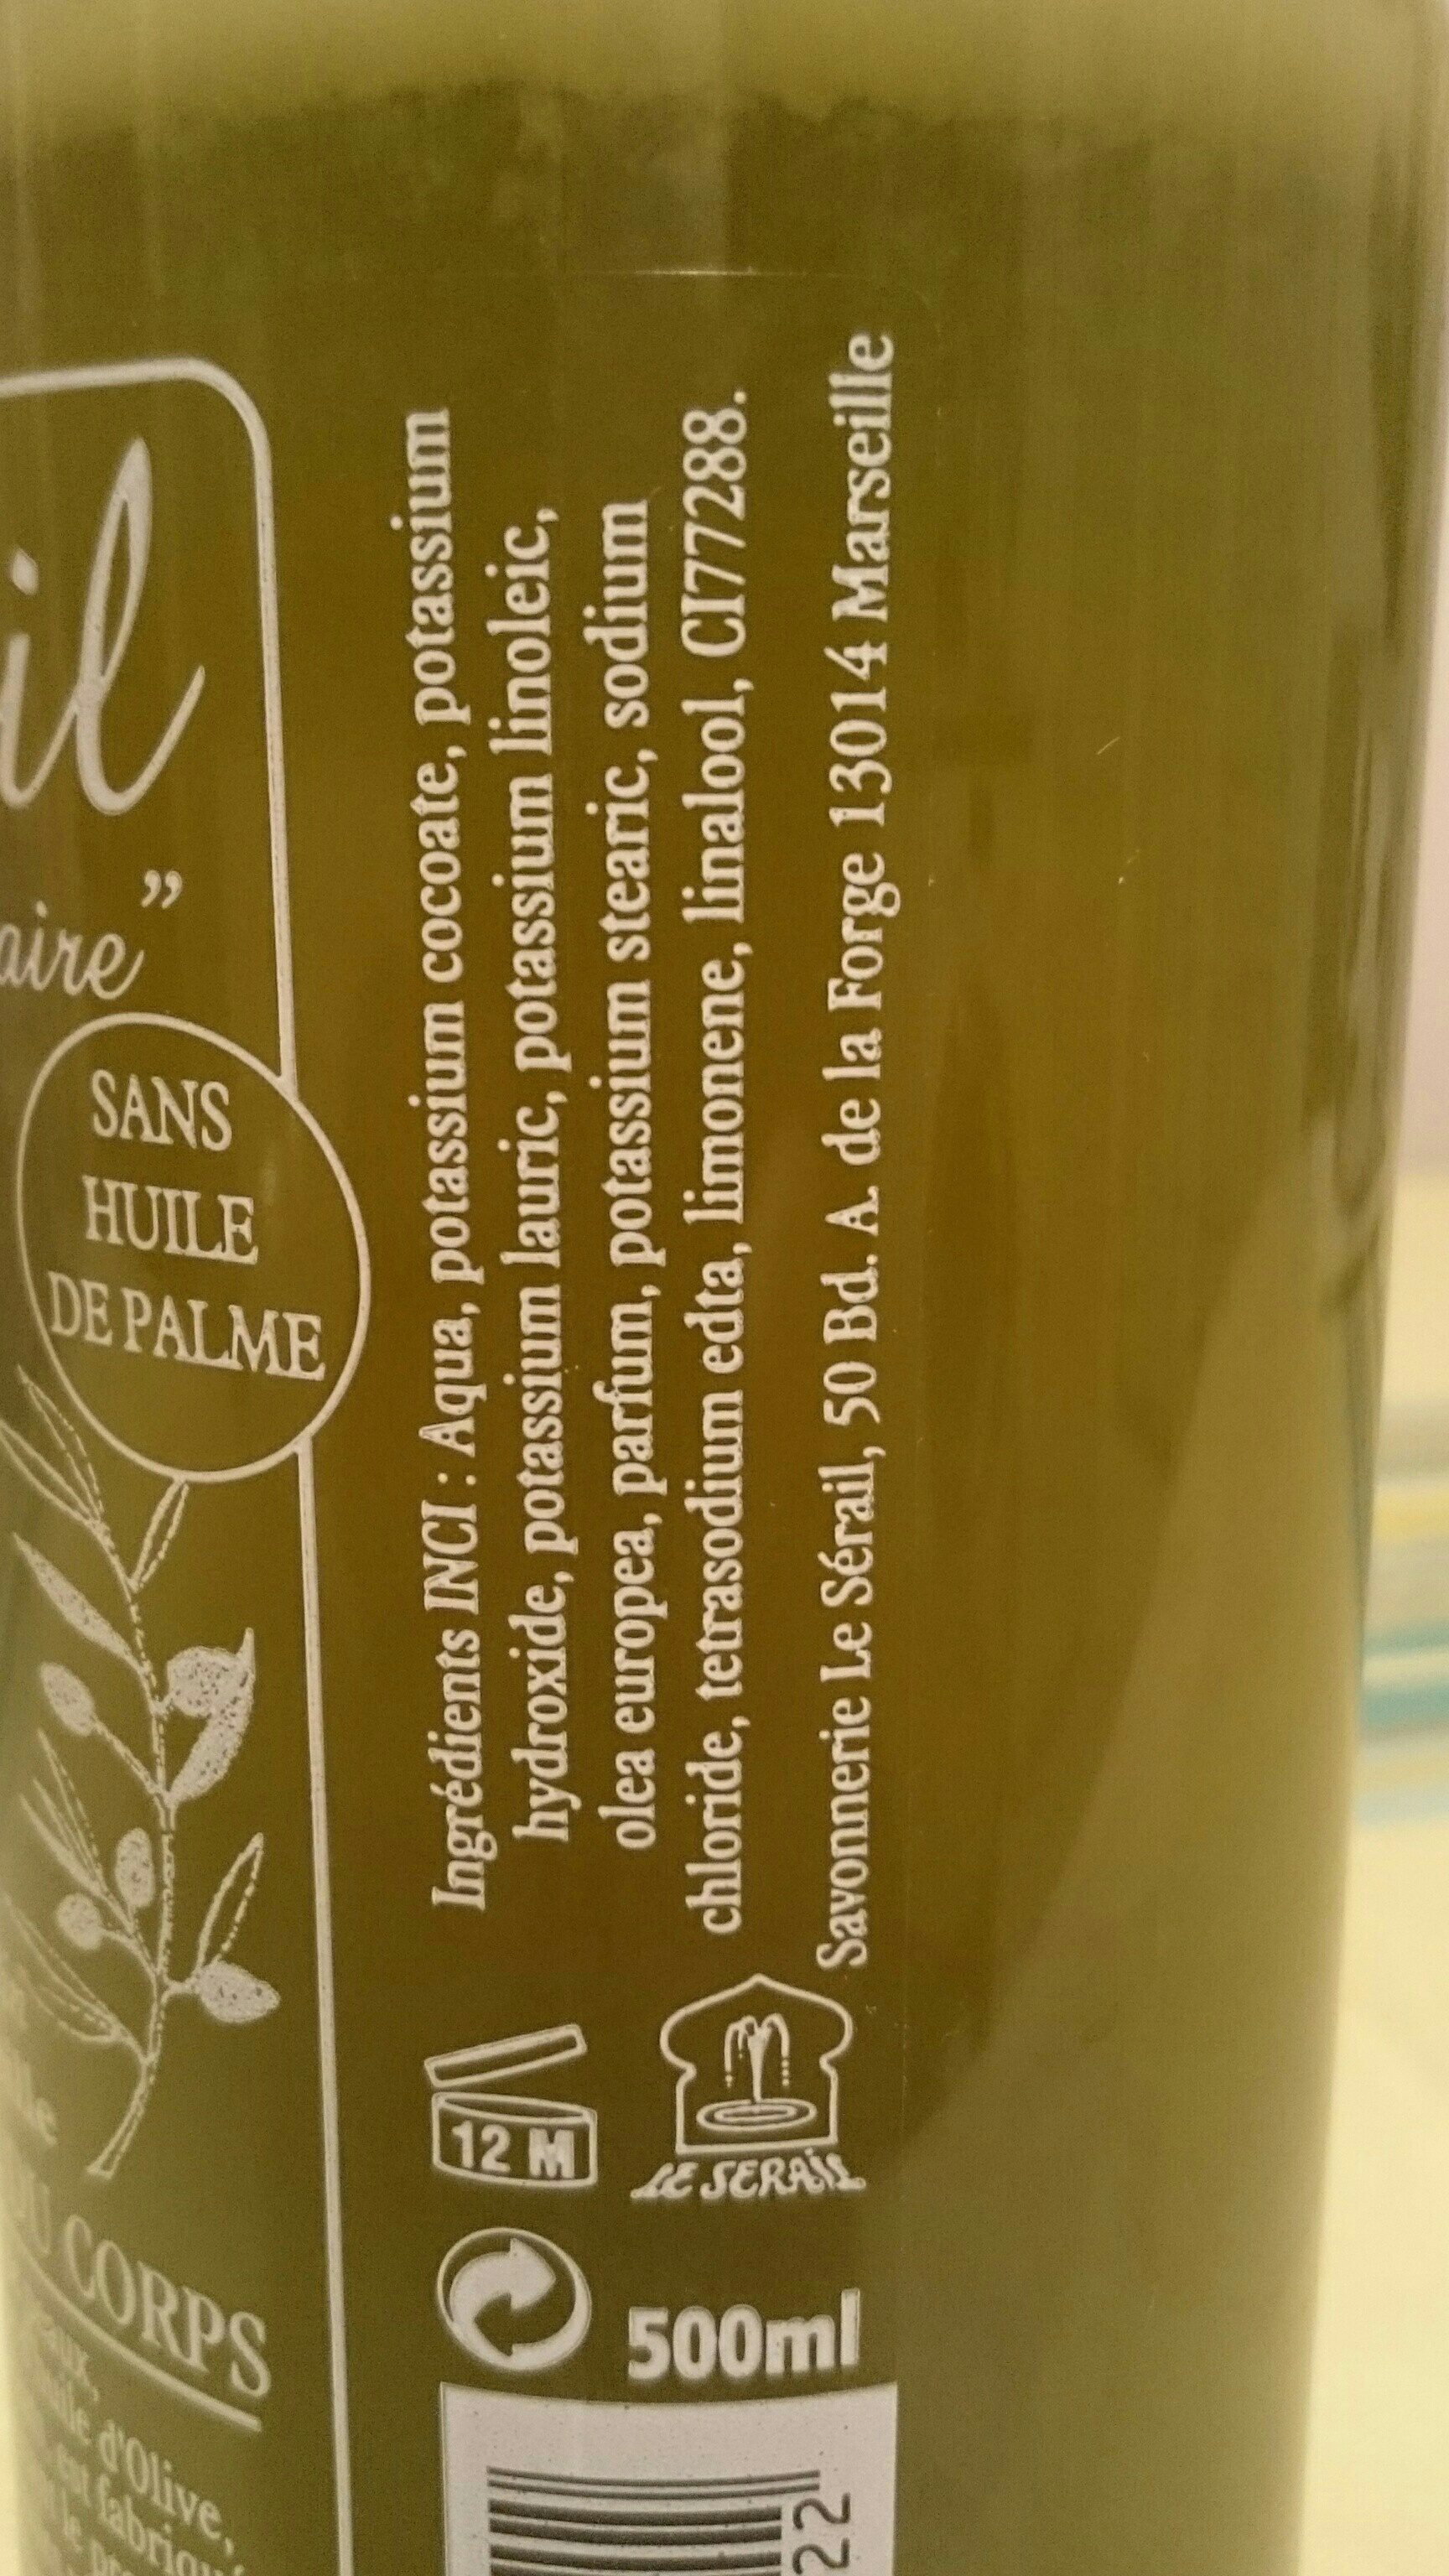 Véritable savon liquide de Marseille - Ingredients - fr